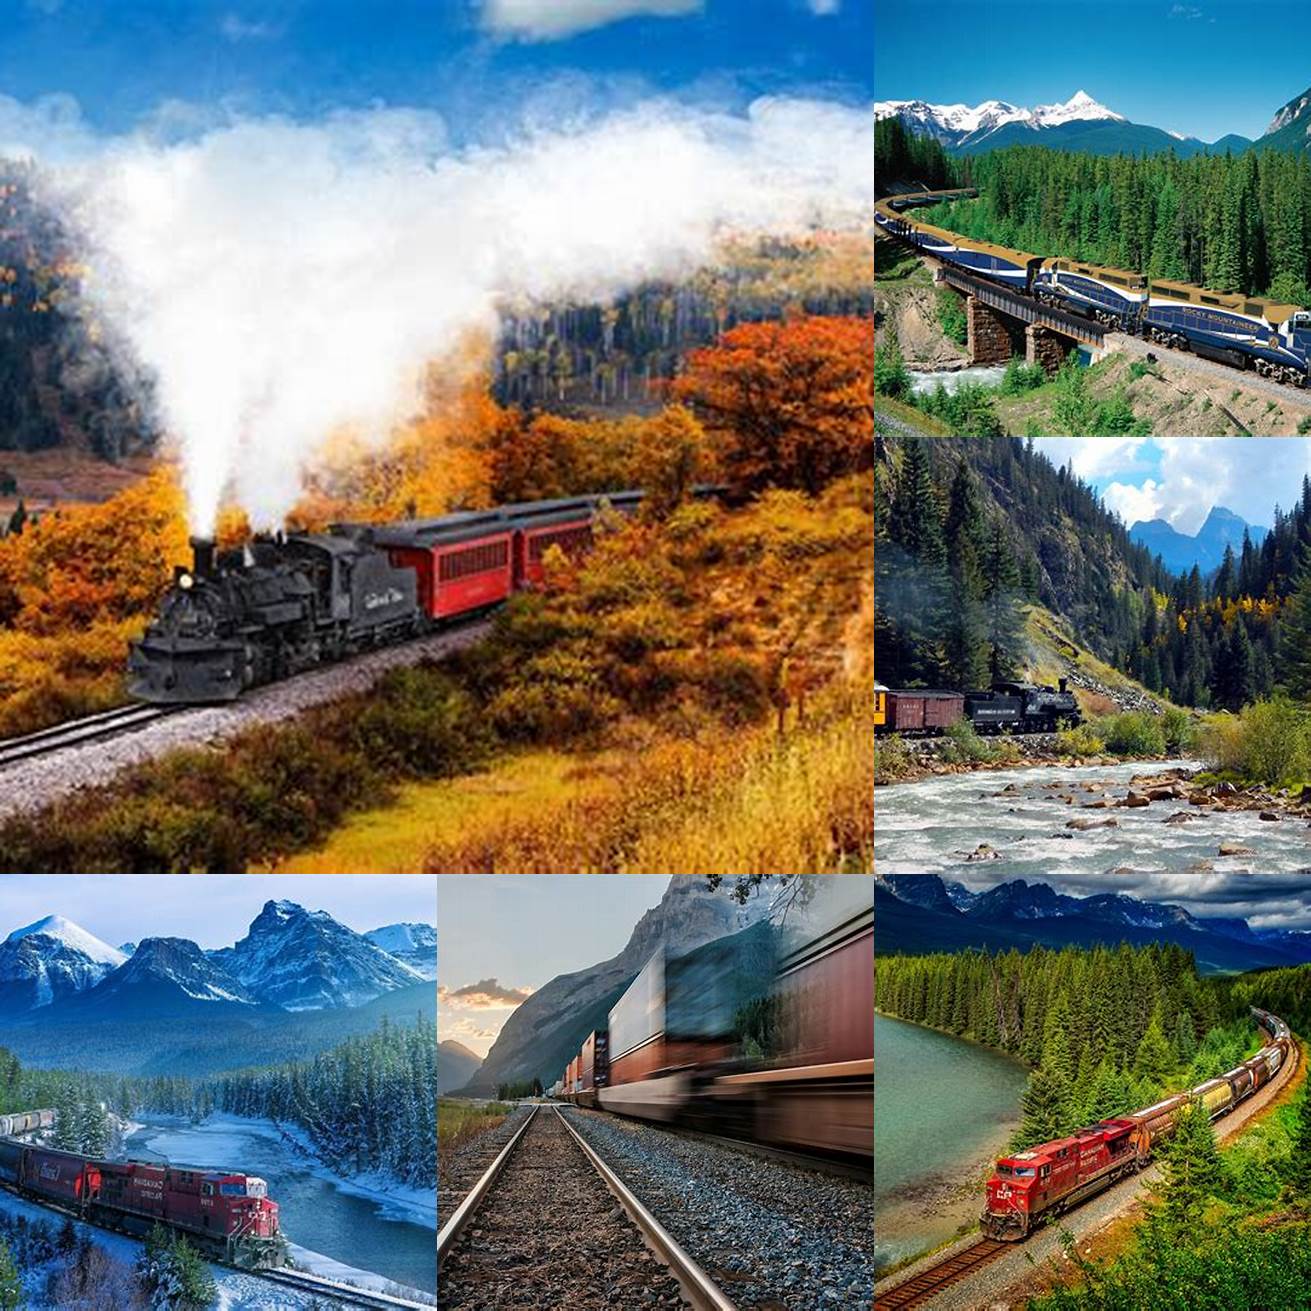 Train passing through scenic landscapes